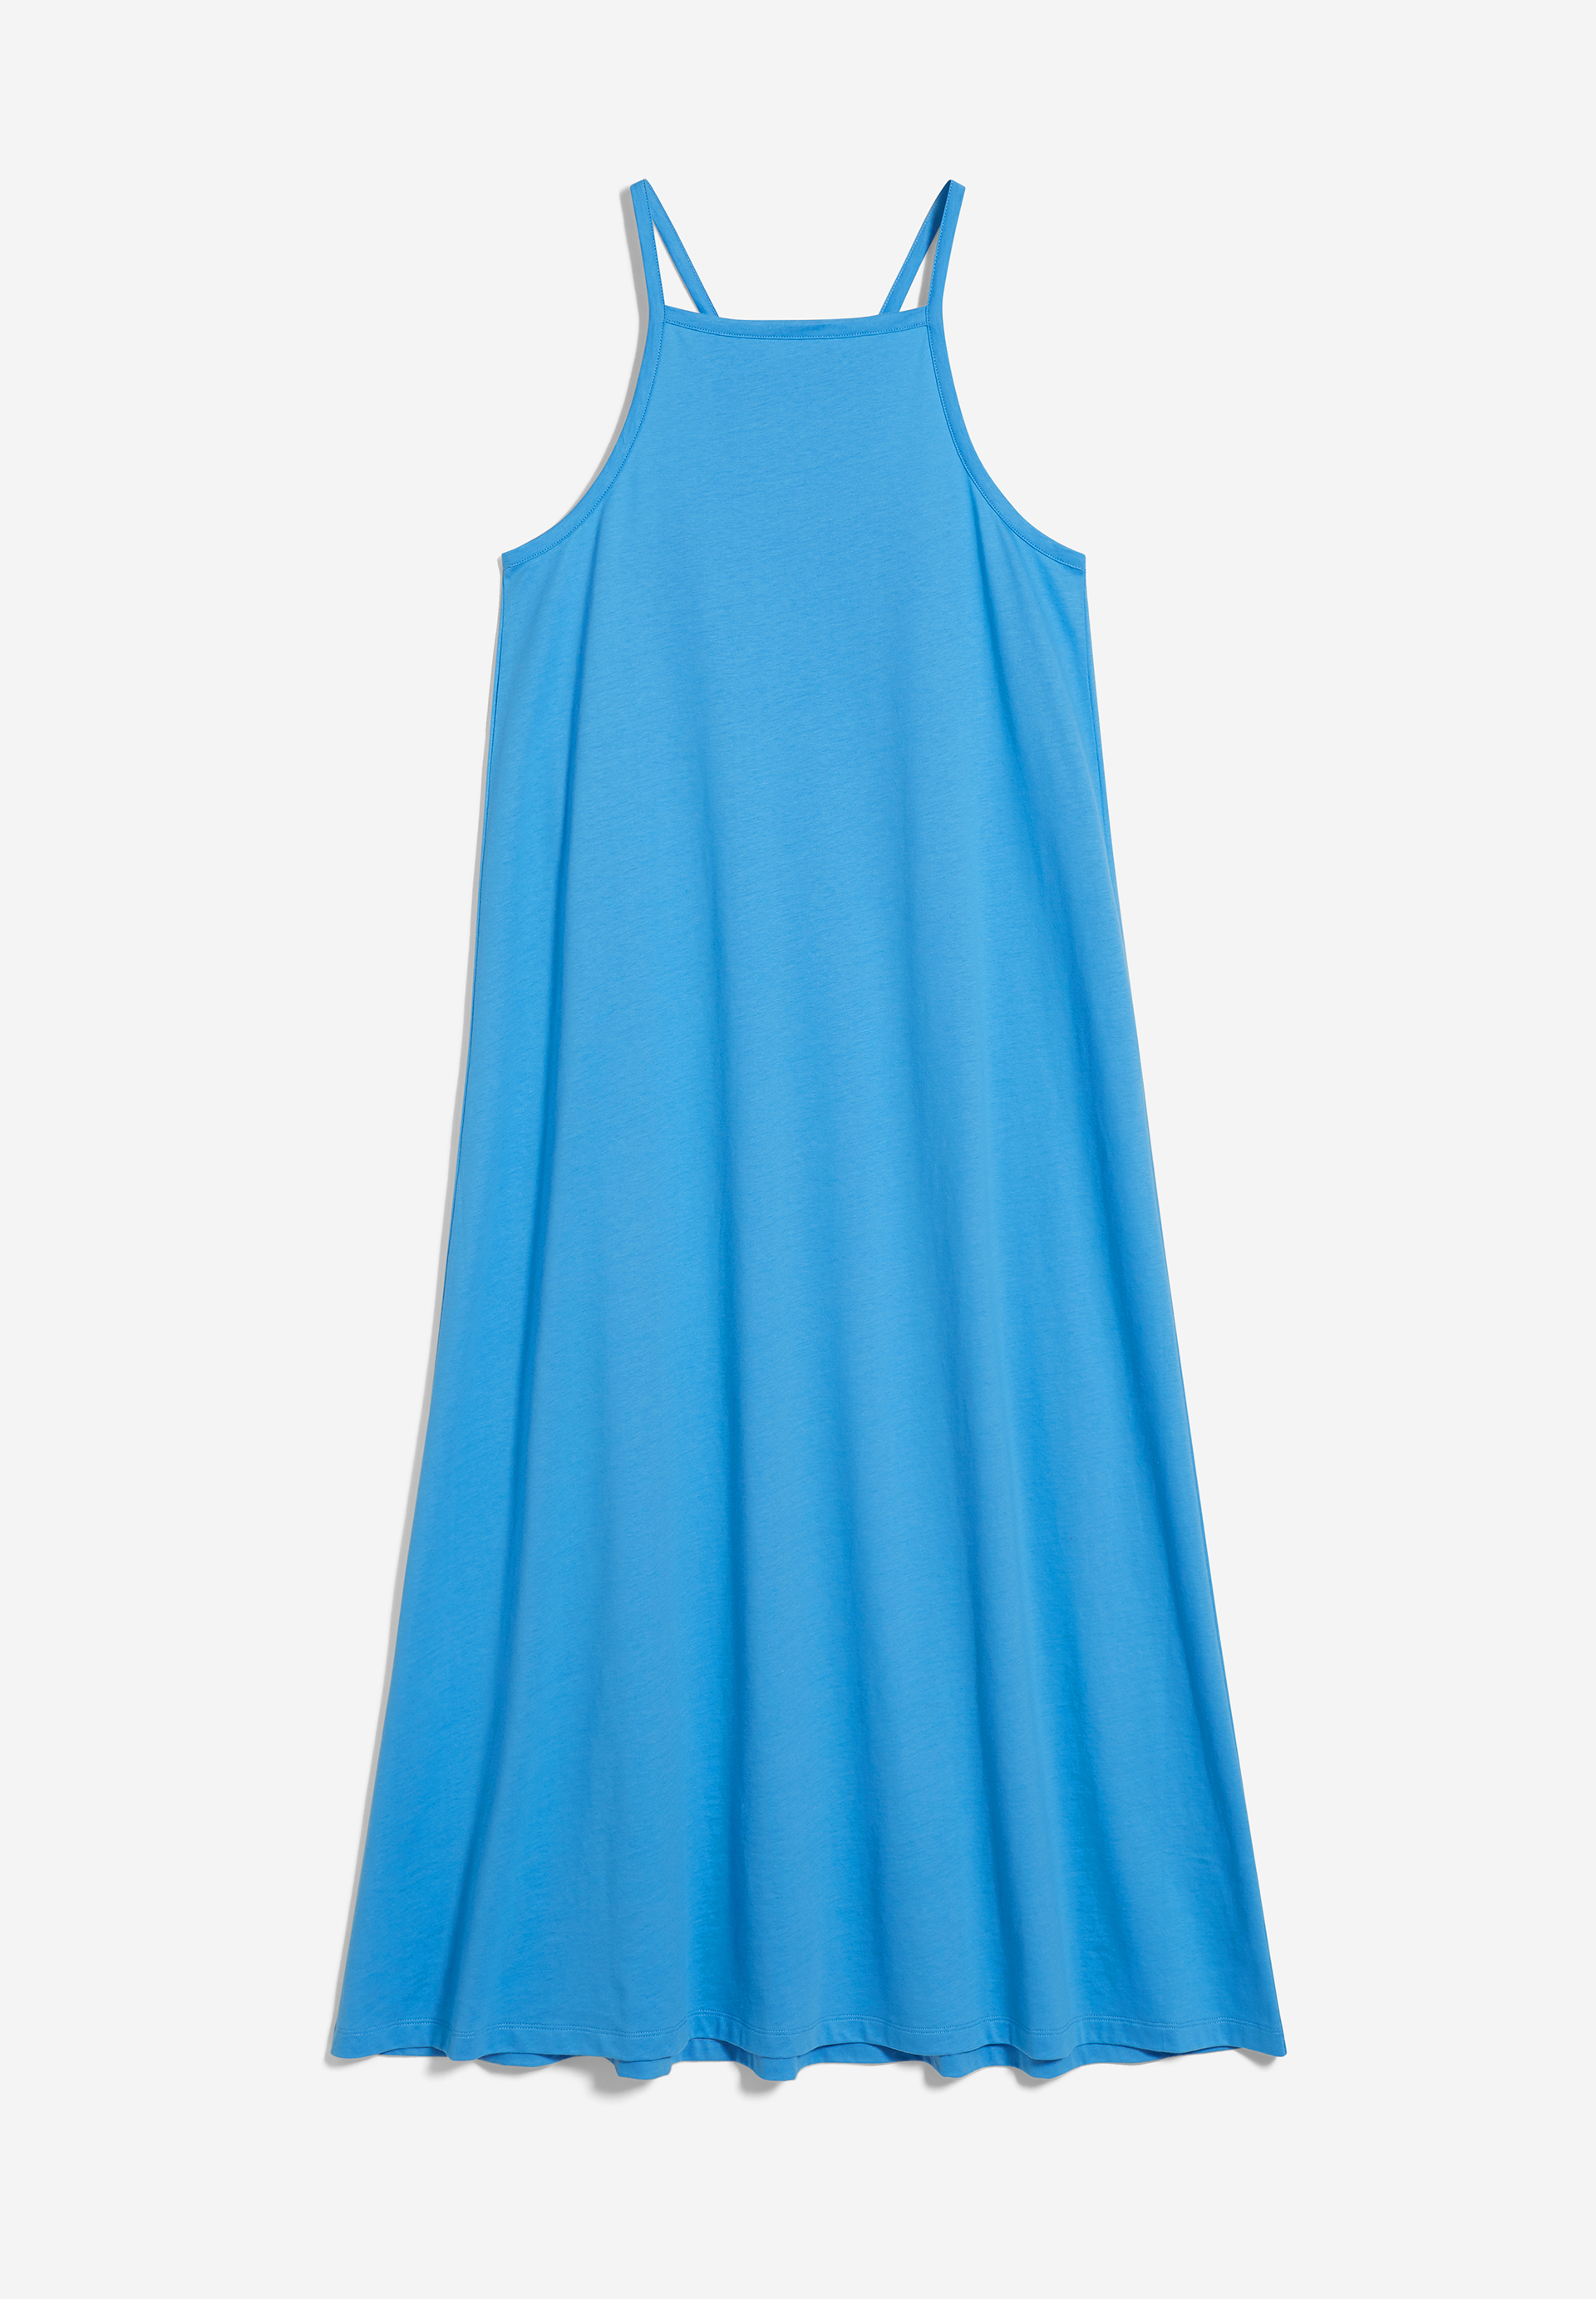 THIDAA MERCERIZED Jersey Dress Loose Fit made of Organic Cotton